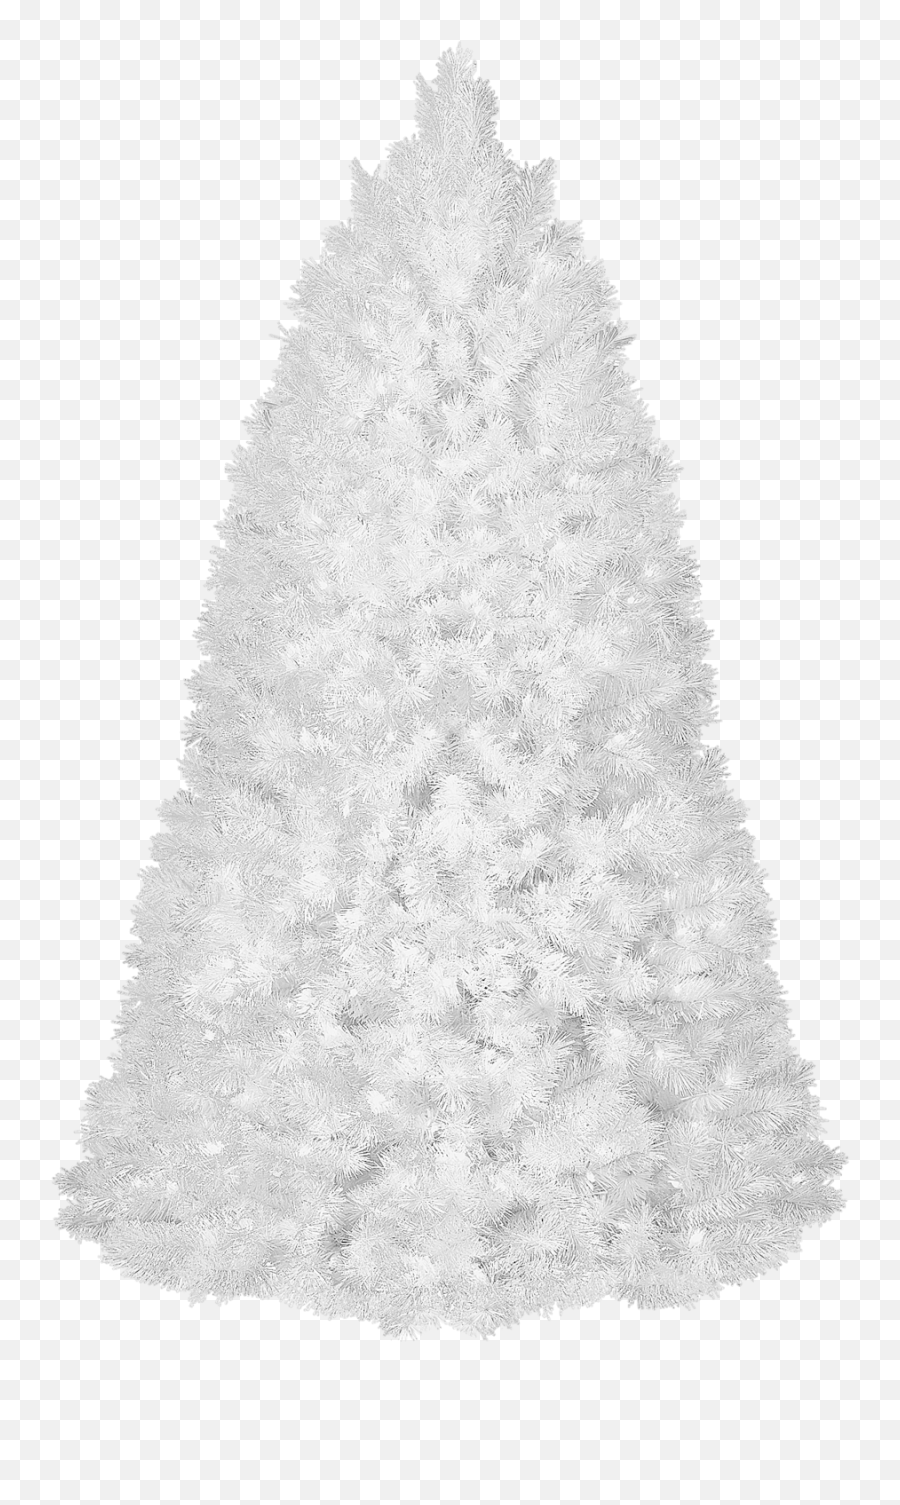 6 - White Christmas Trees Png,White Christmas Tree Png